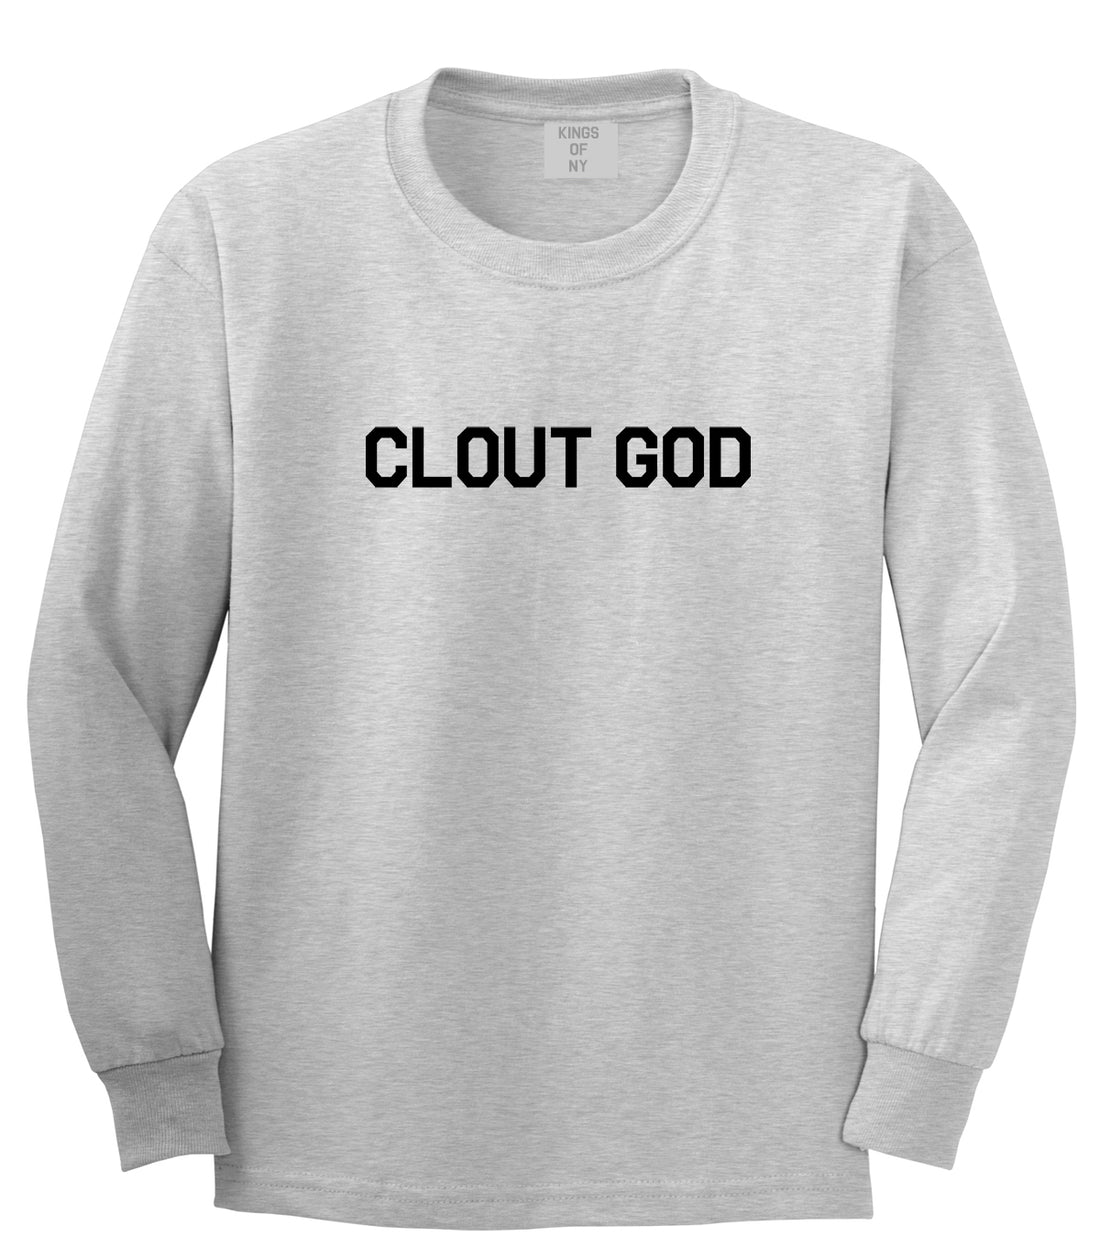 Clout God Mens Long Sleeve T-Shirt Grey by Kings Of NY